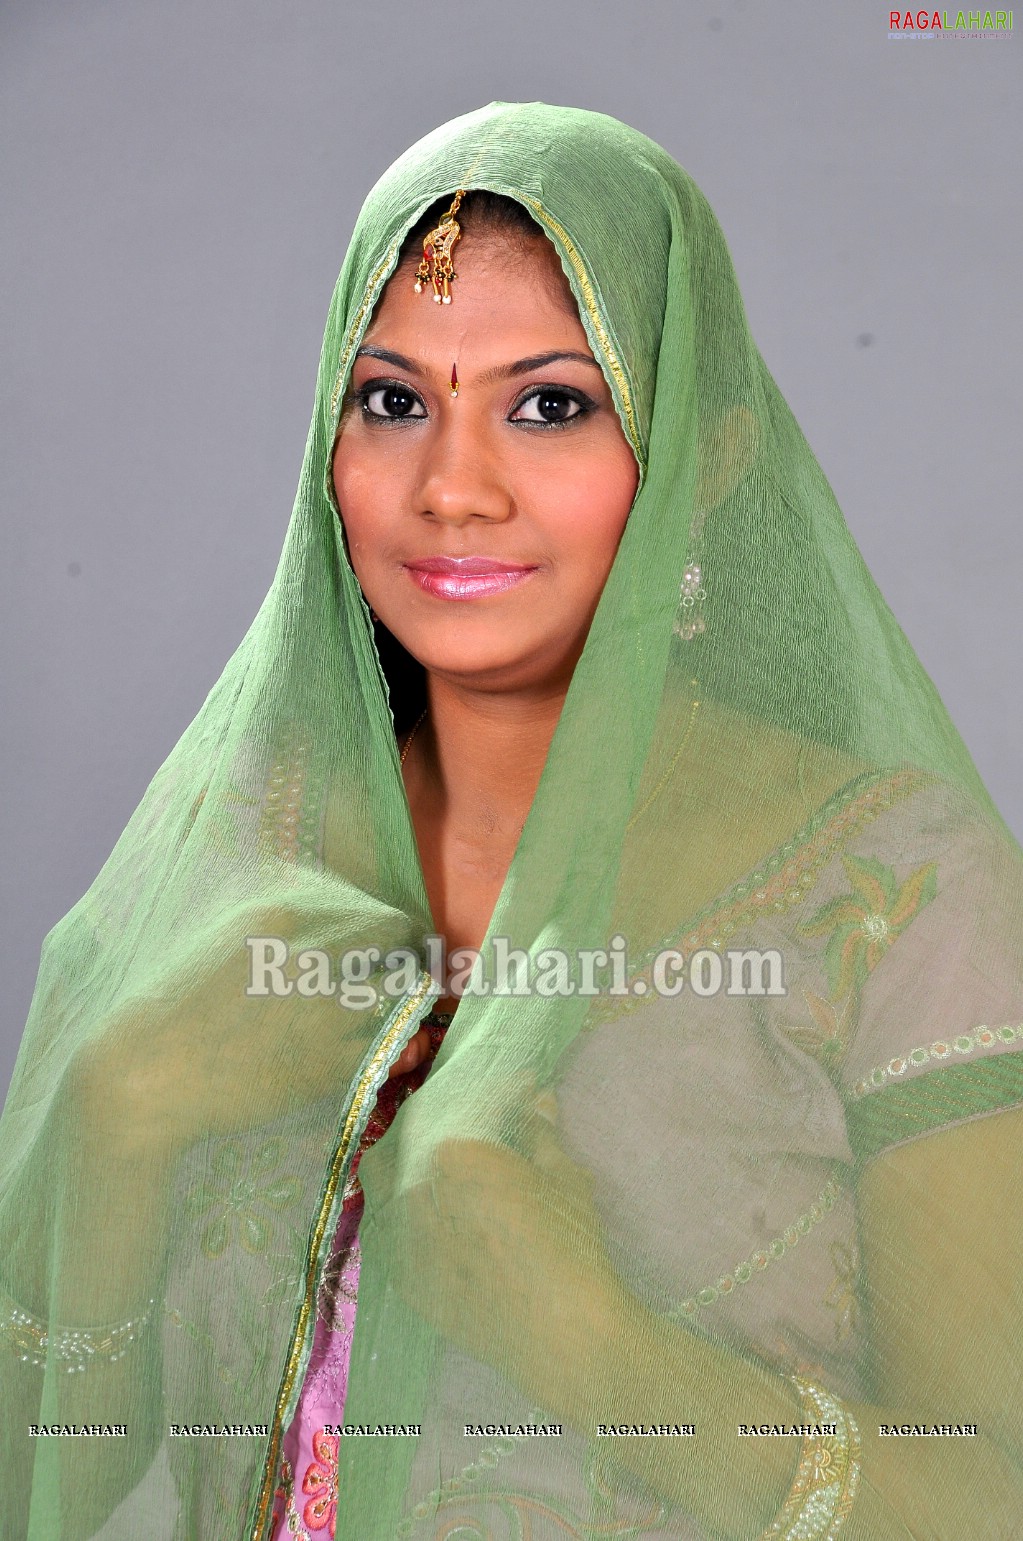 Swetha in Pink Churidar Exclusive Photo Shoot